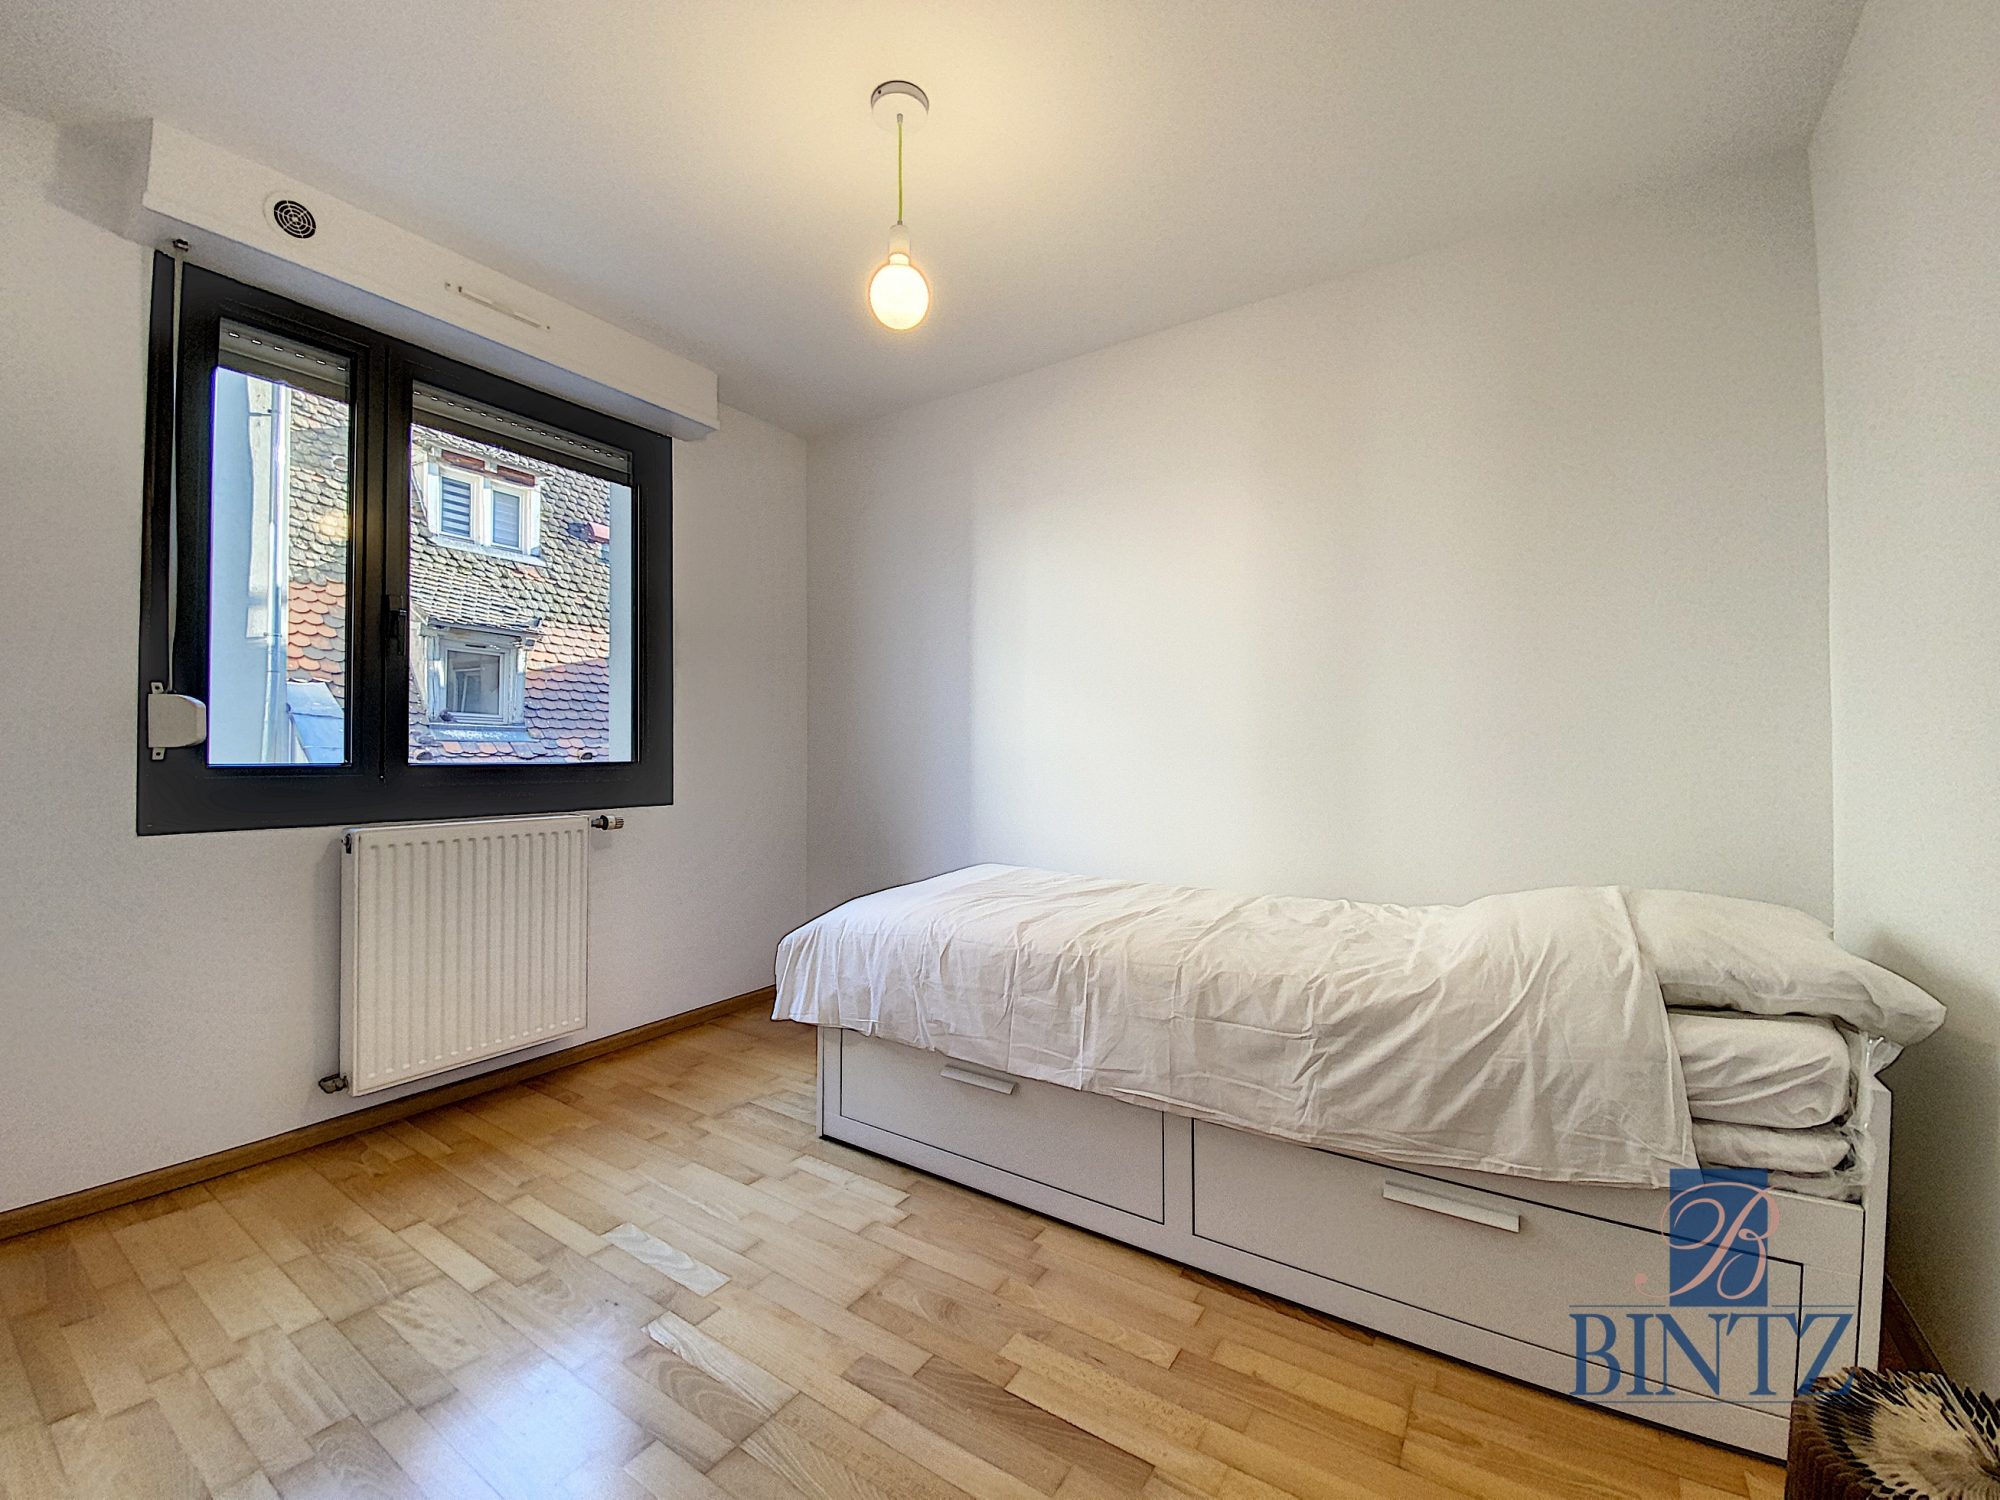 4 PIECE MEUBLE HYPERCENTRE - location appartement Strasbourg - Bintz Immobilier - 9